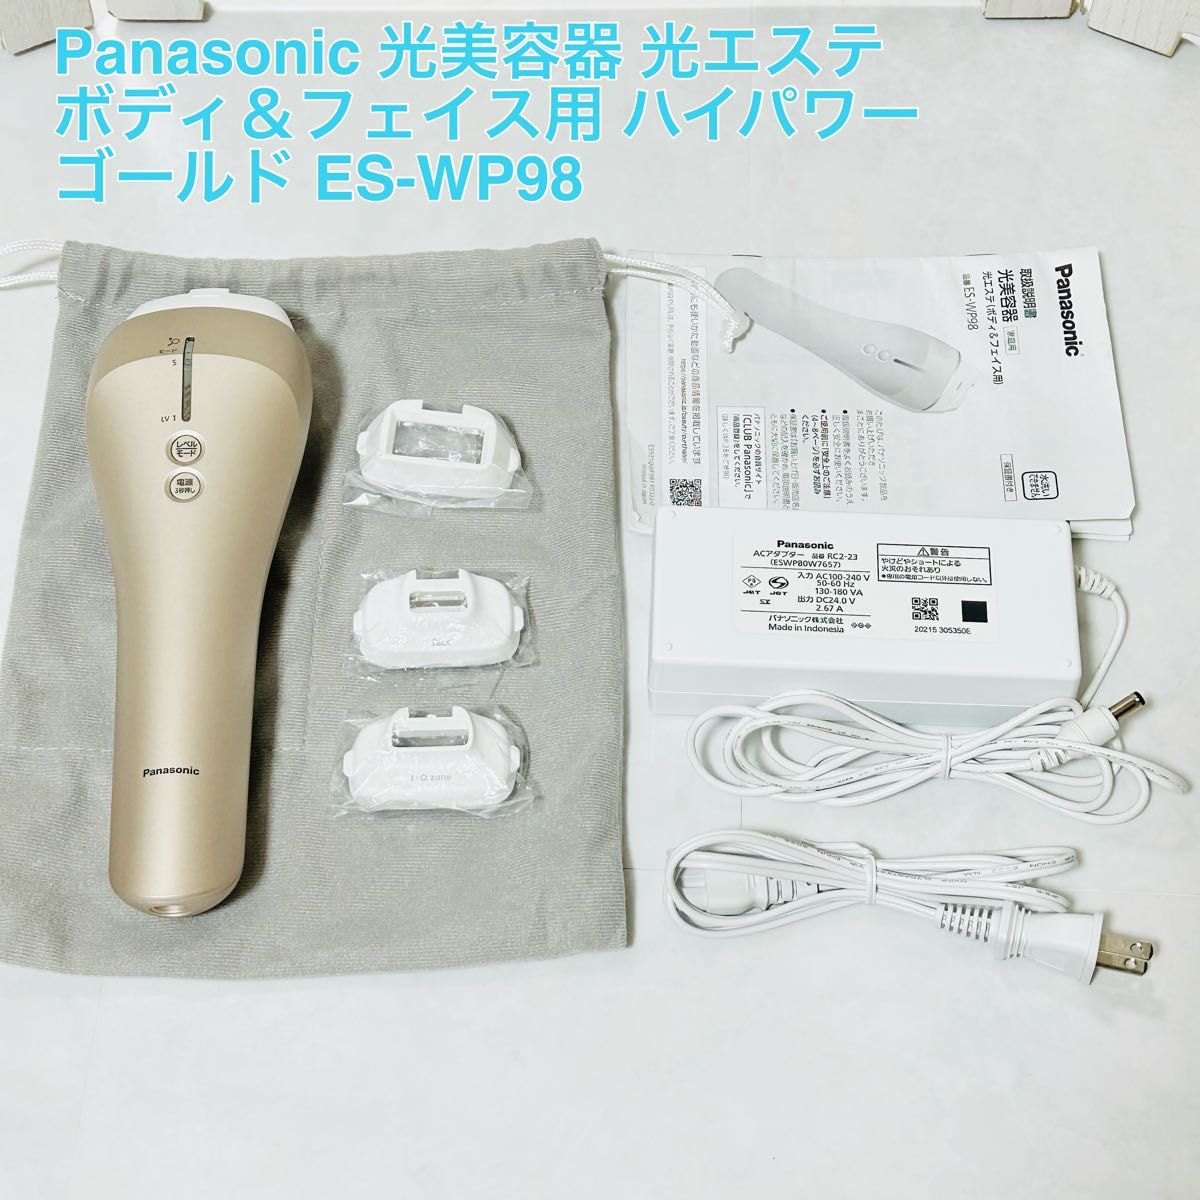 Panasonic 光エステ ボディ＆フェイス用 ハイパワー ES-WP98